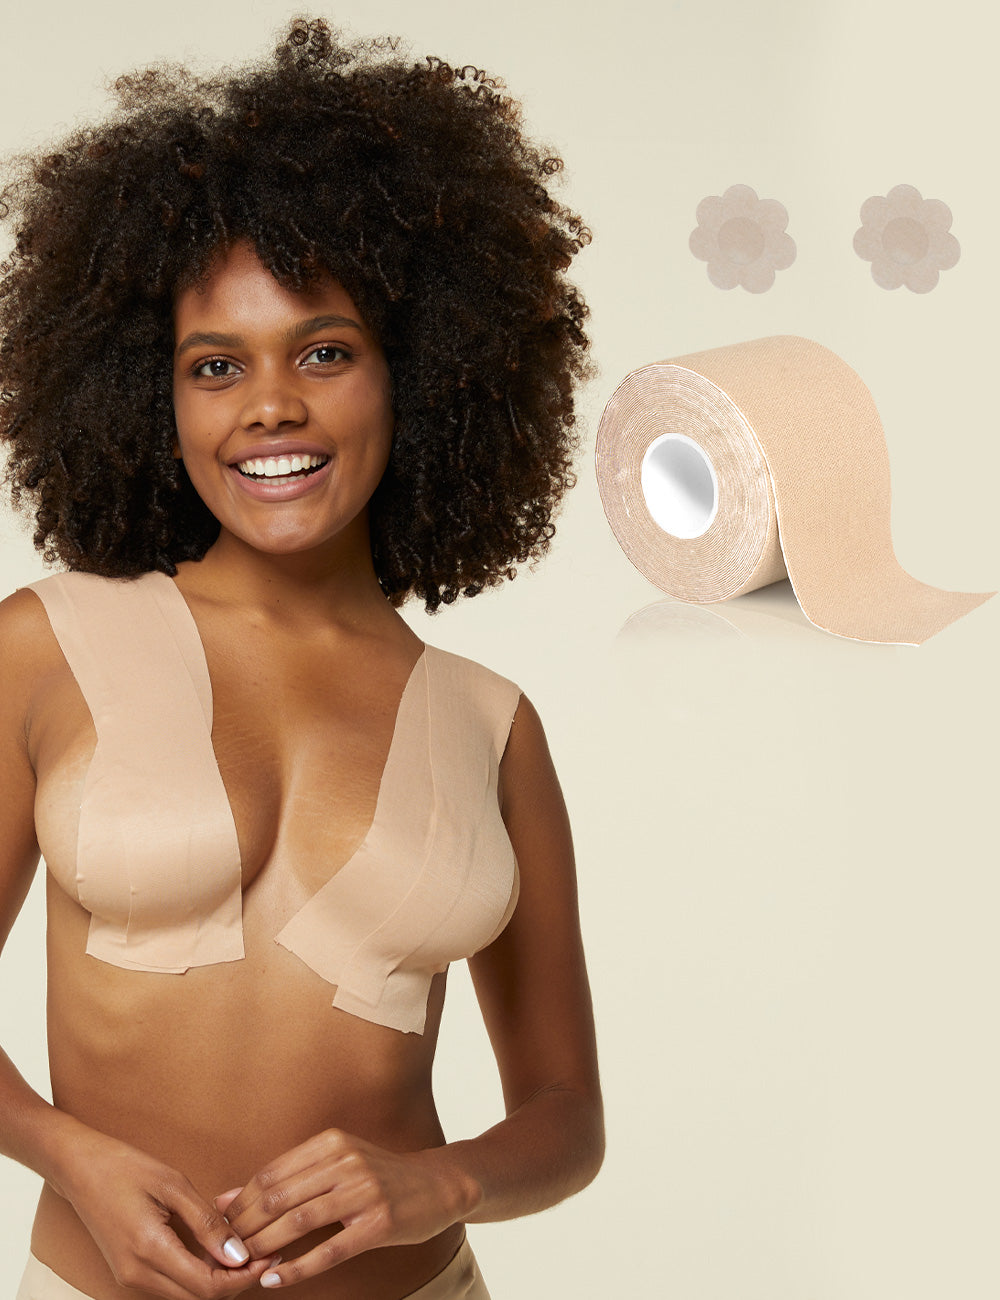 Women 1.97/2.95 Inch Breast Lifter Boob Tape